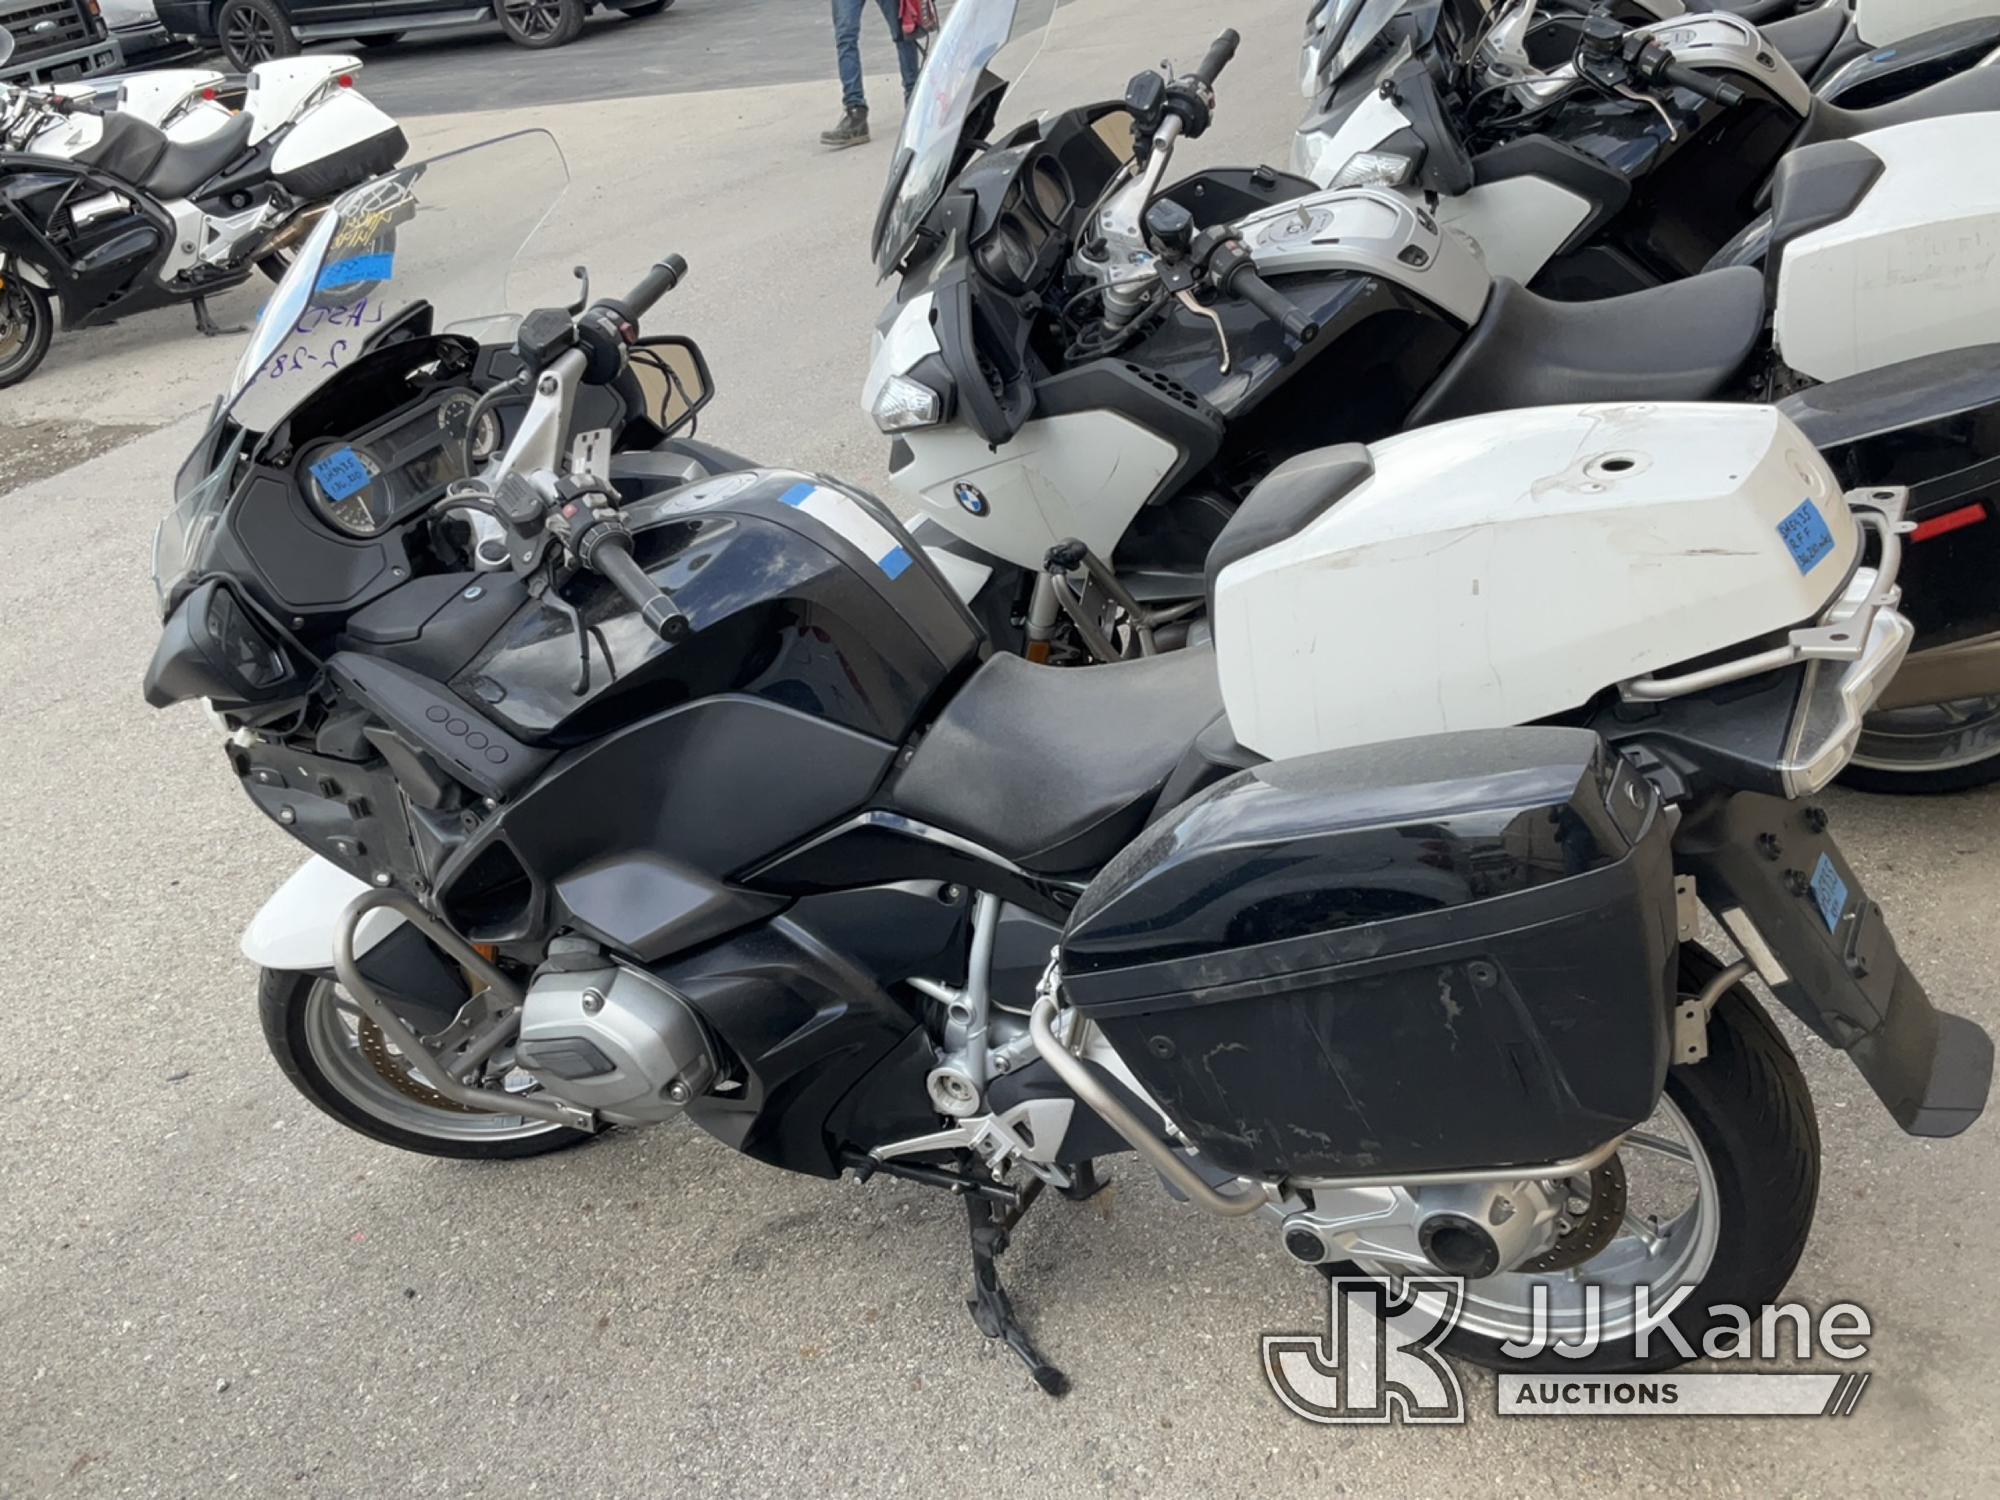 (Jurupa Valley, CA) 2015 BMW R1200RT Motorcycle Not Running , No Key, Stripped Of Parts